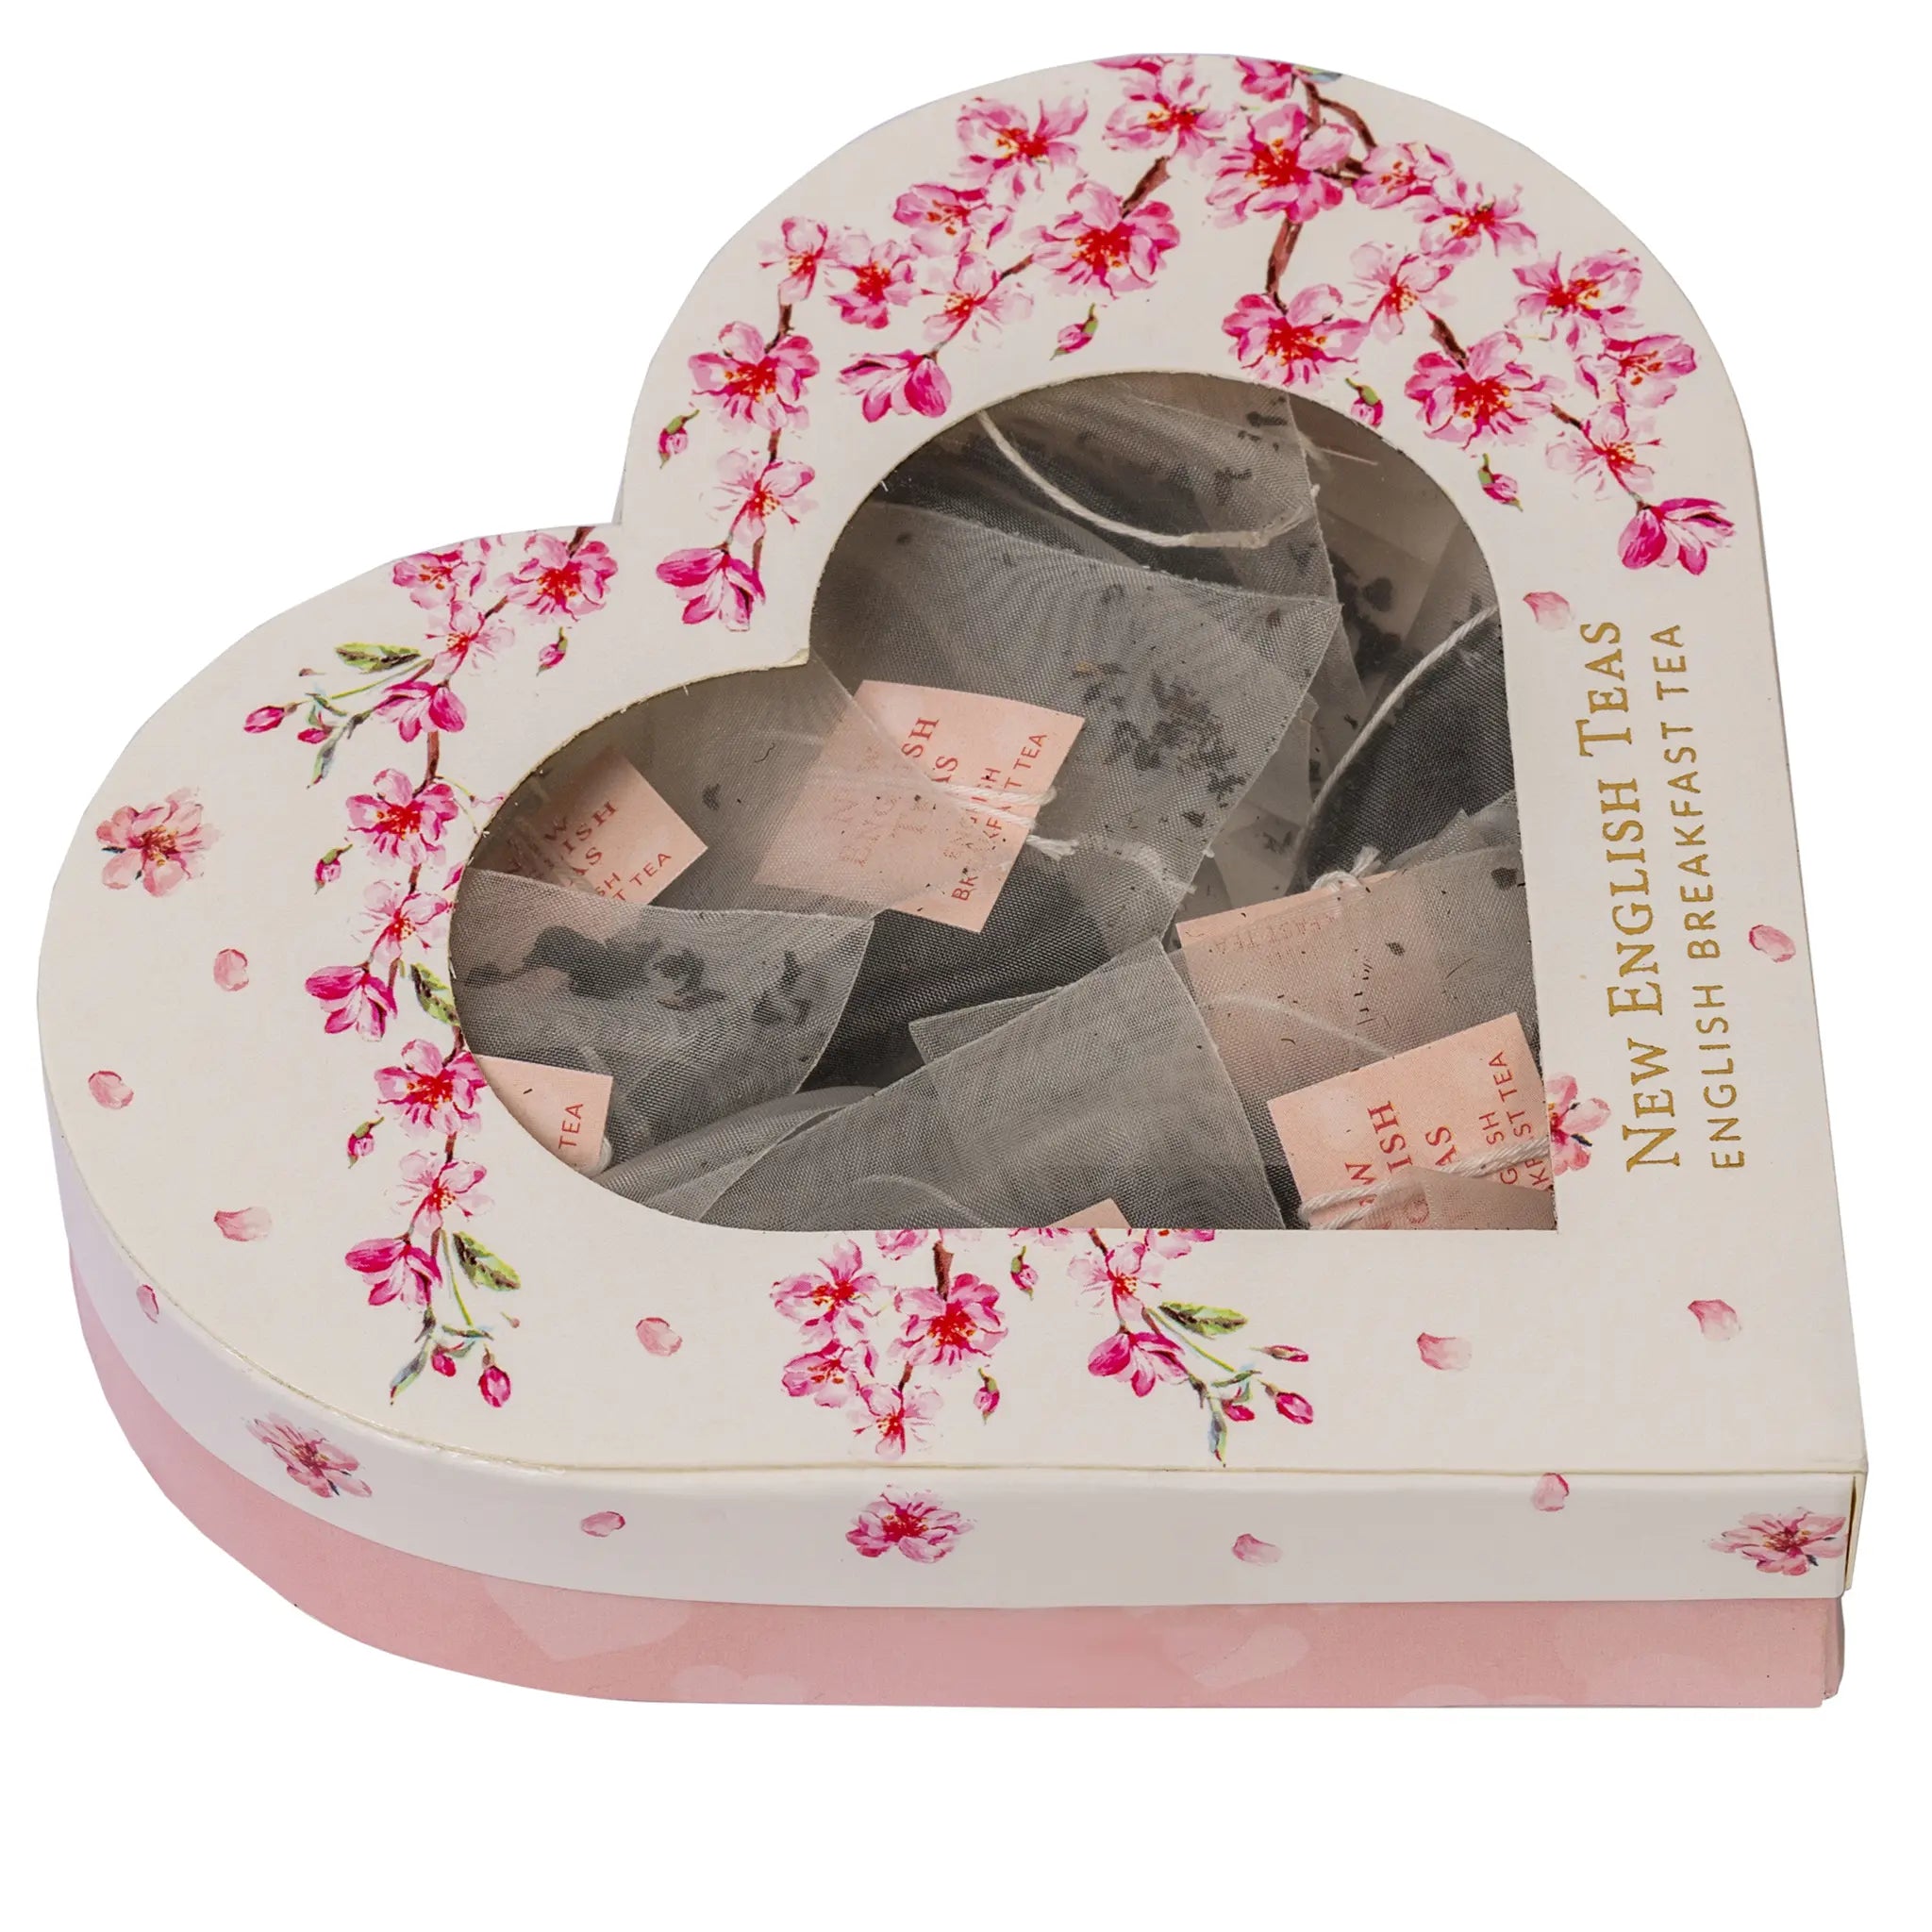 The Heart Shaped Box of Tea Gift Carton by New English TeasThe Heart Shaped Box of Tea Gift Carton by New English Teas